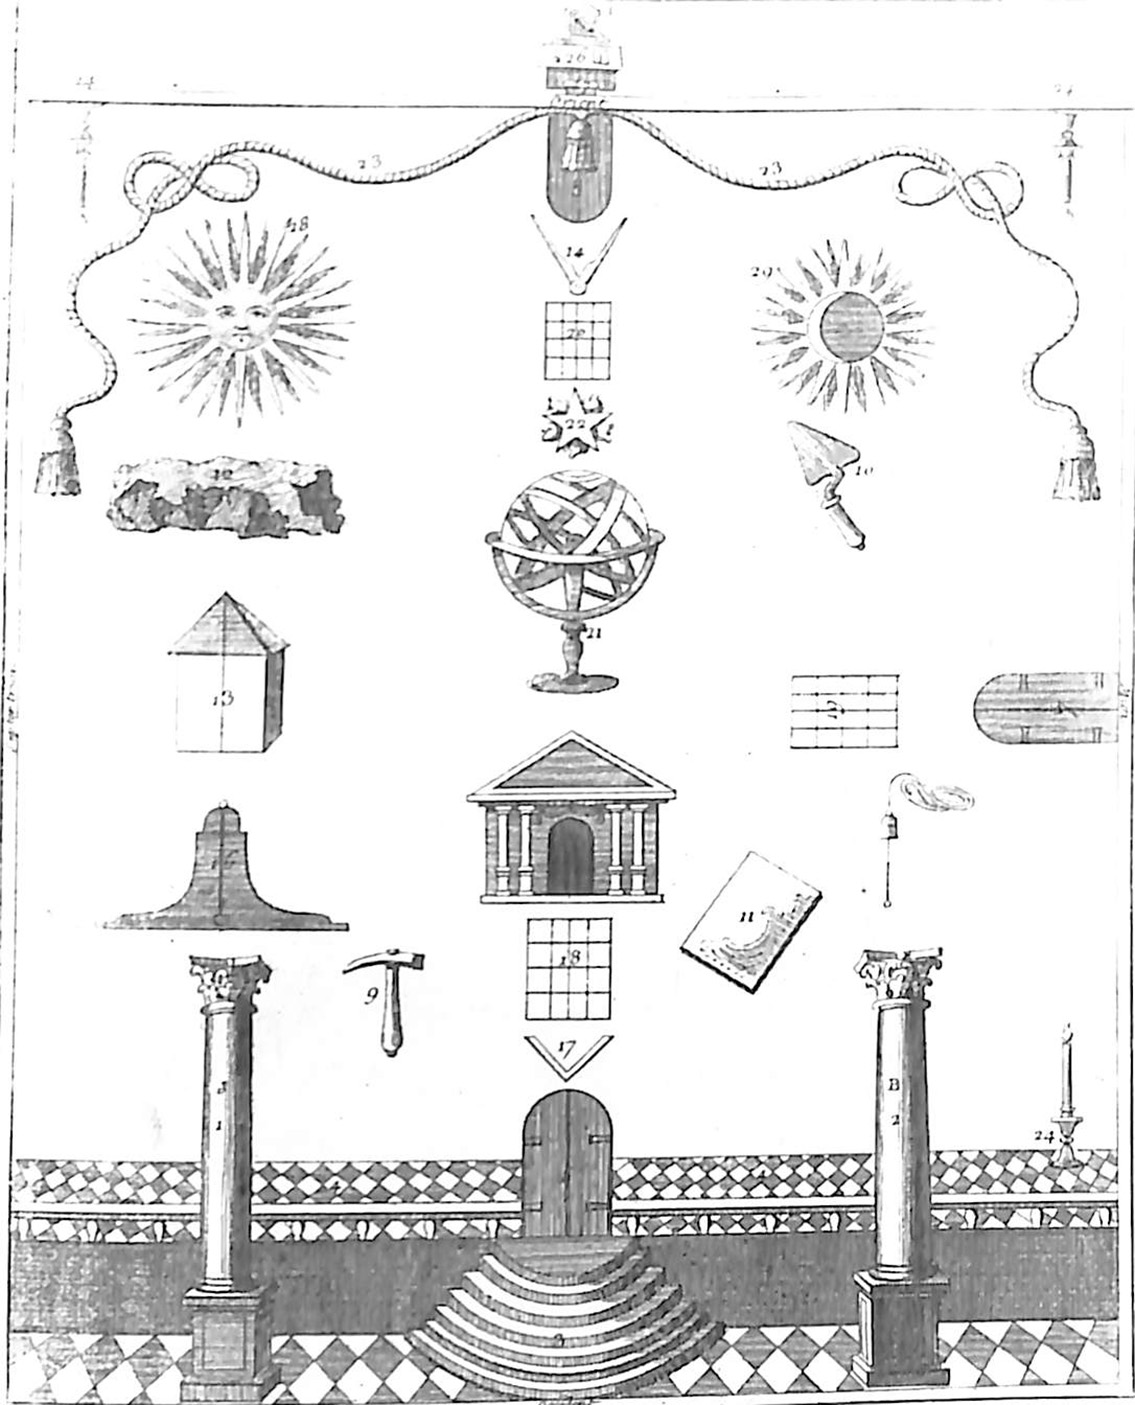 Plan of a Compagnon Lodge